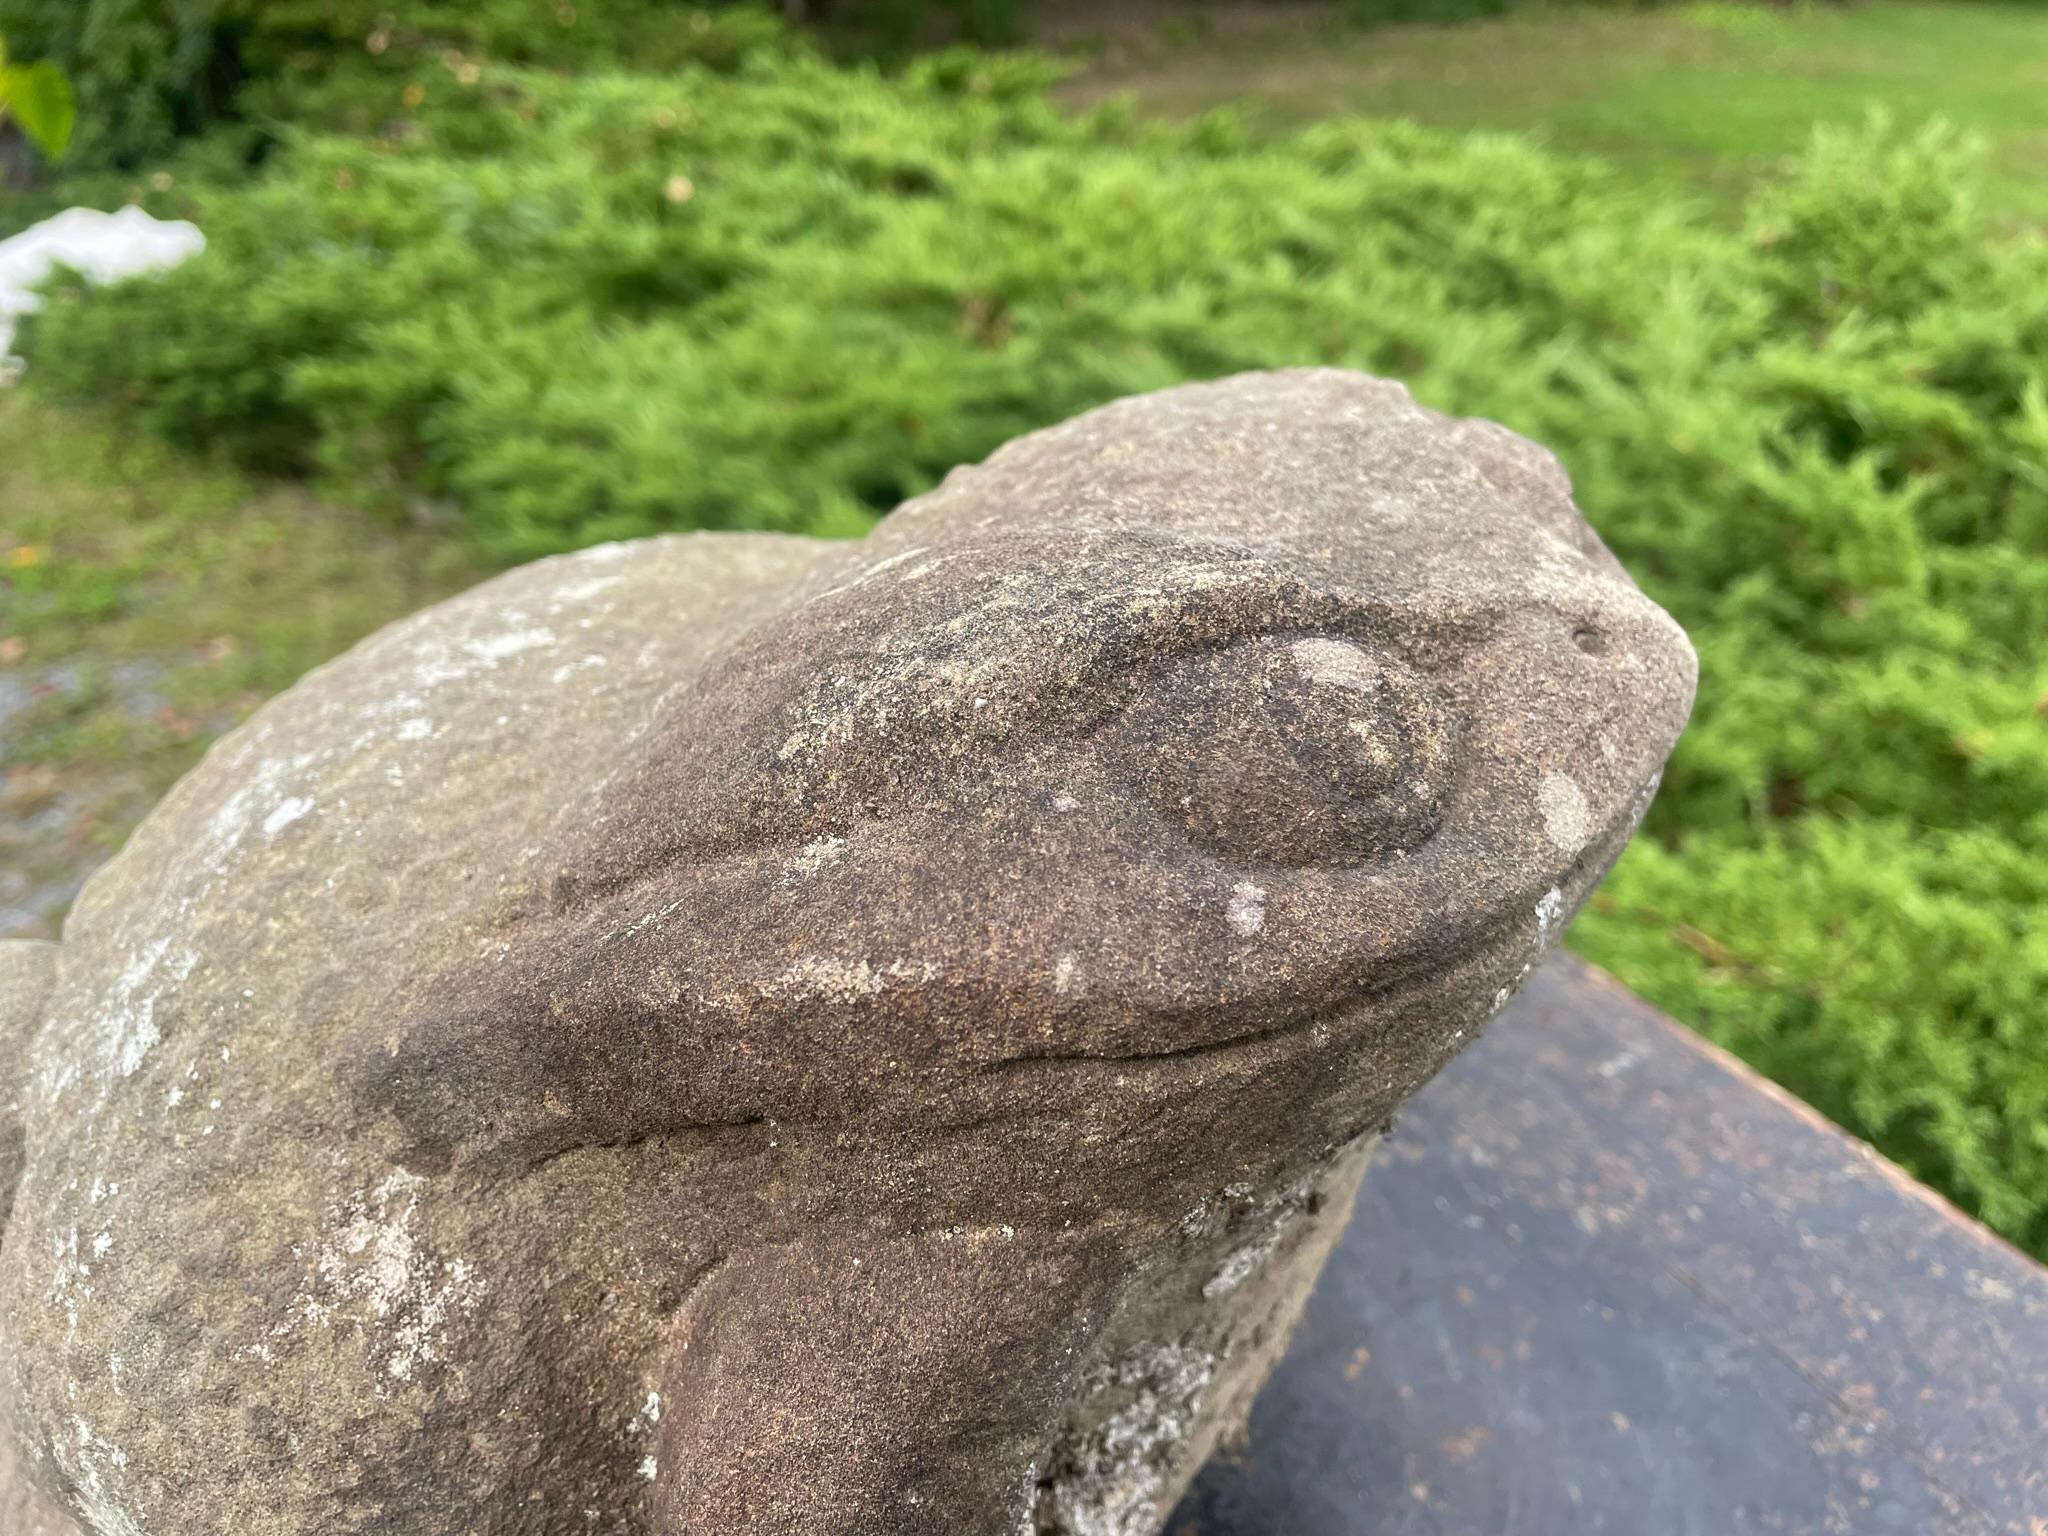 Japanese Big Antique Stone Garden Frog With Superb Details 3